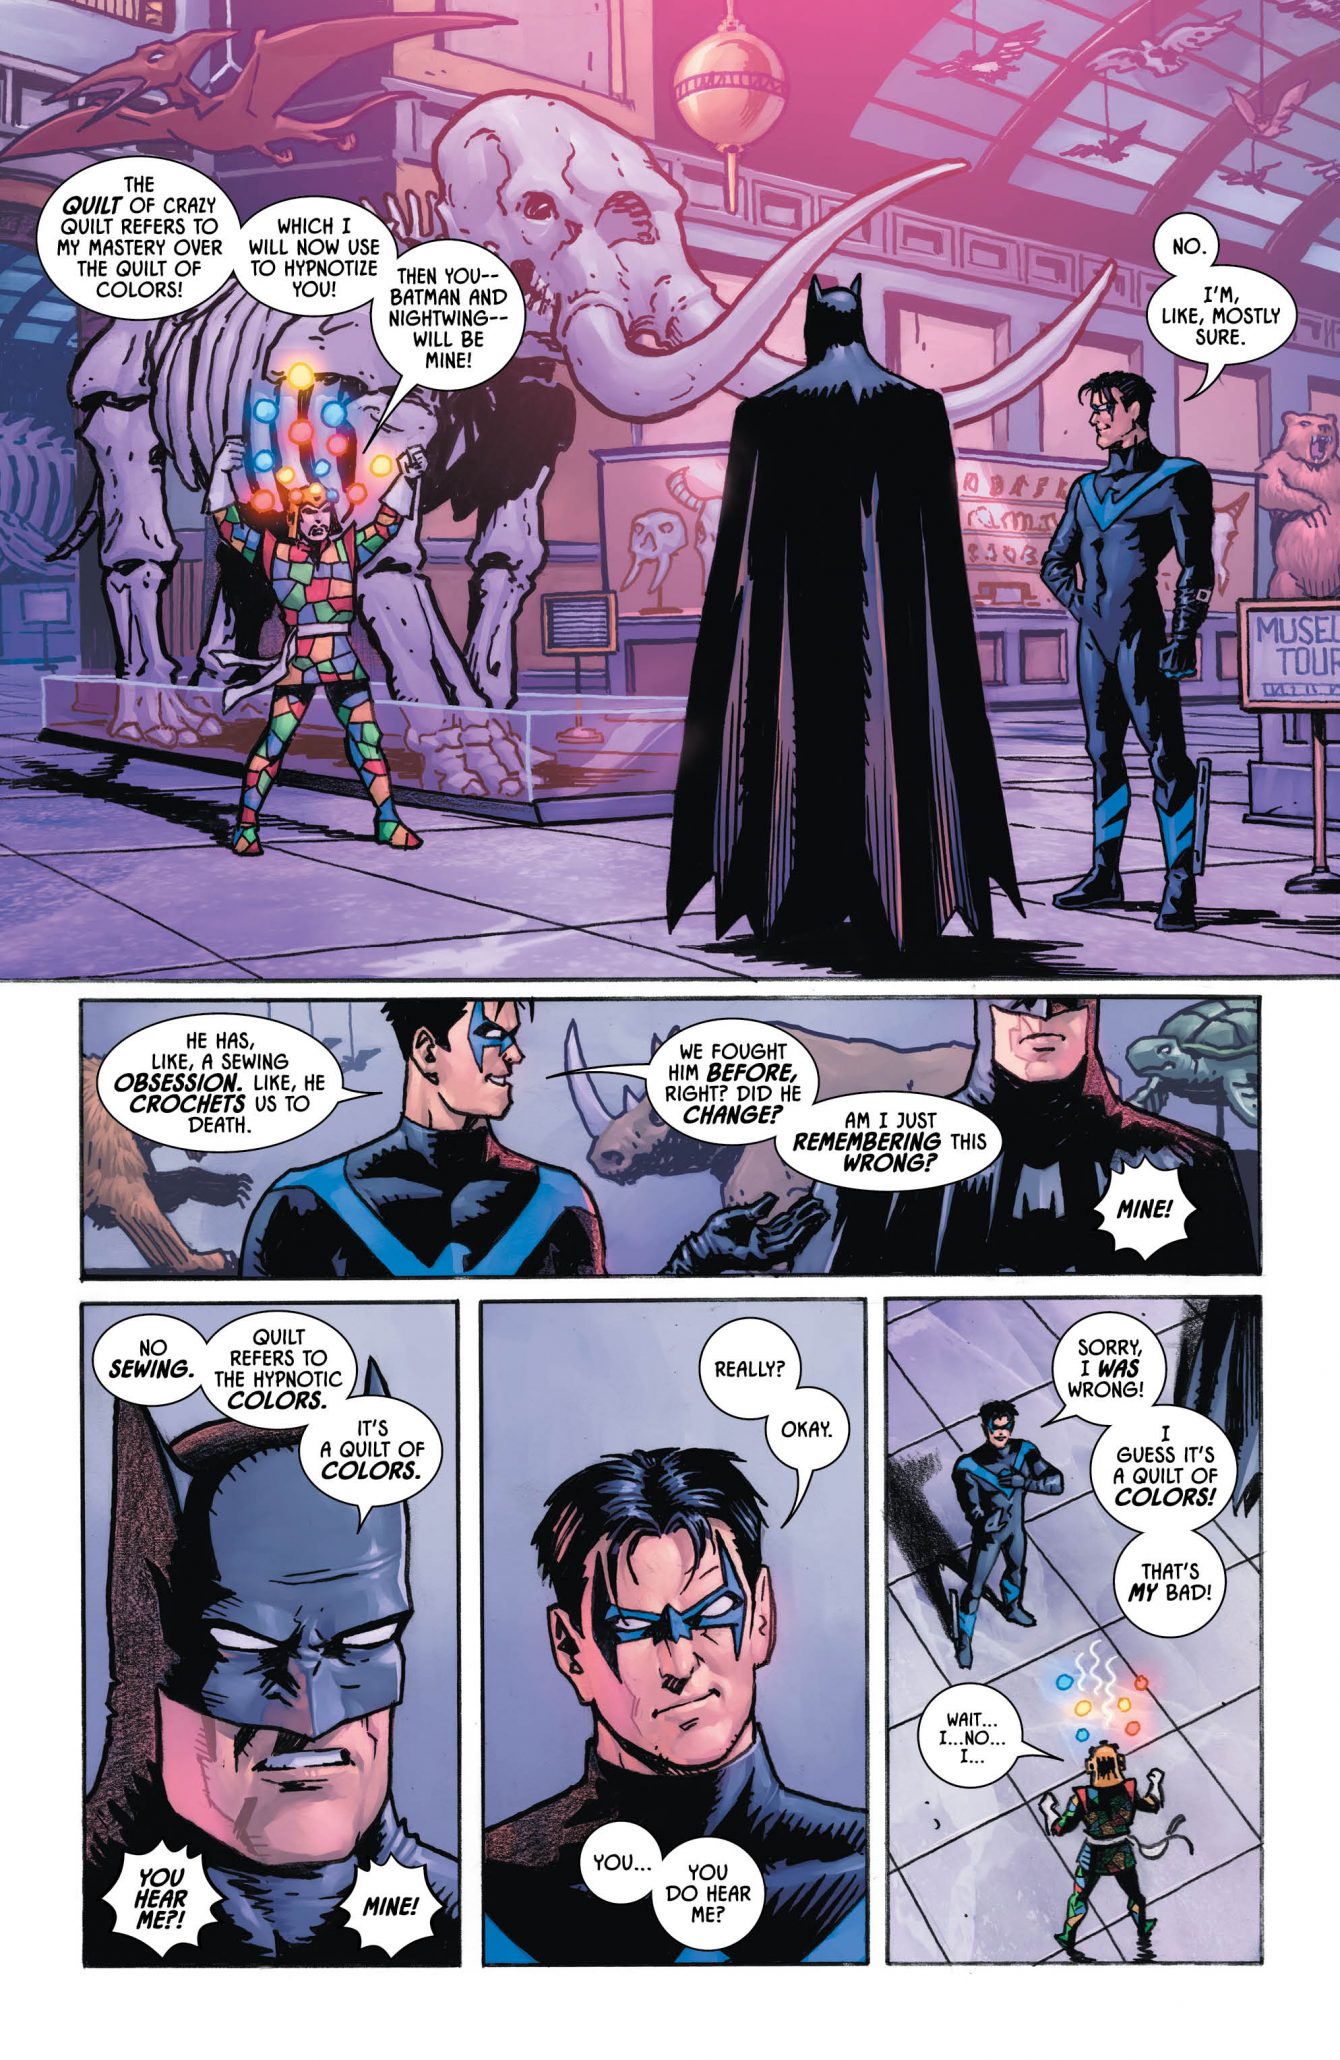 Batman #54